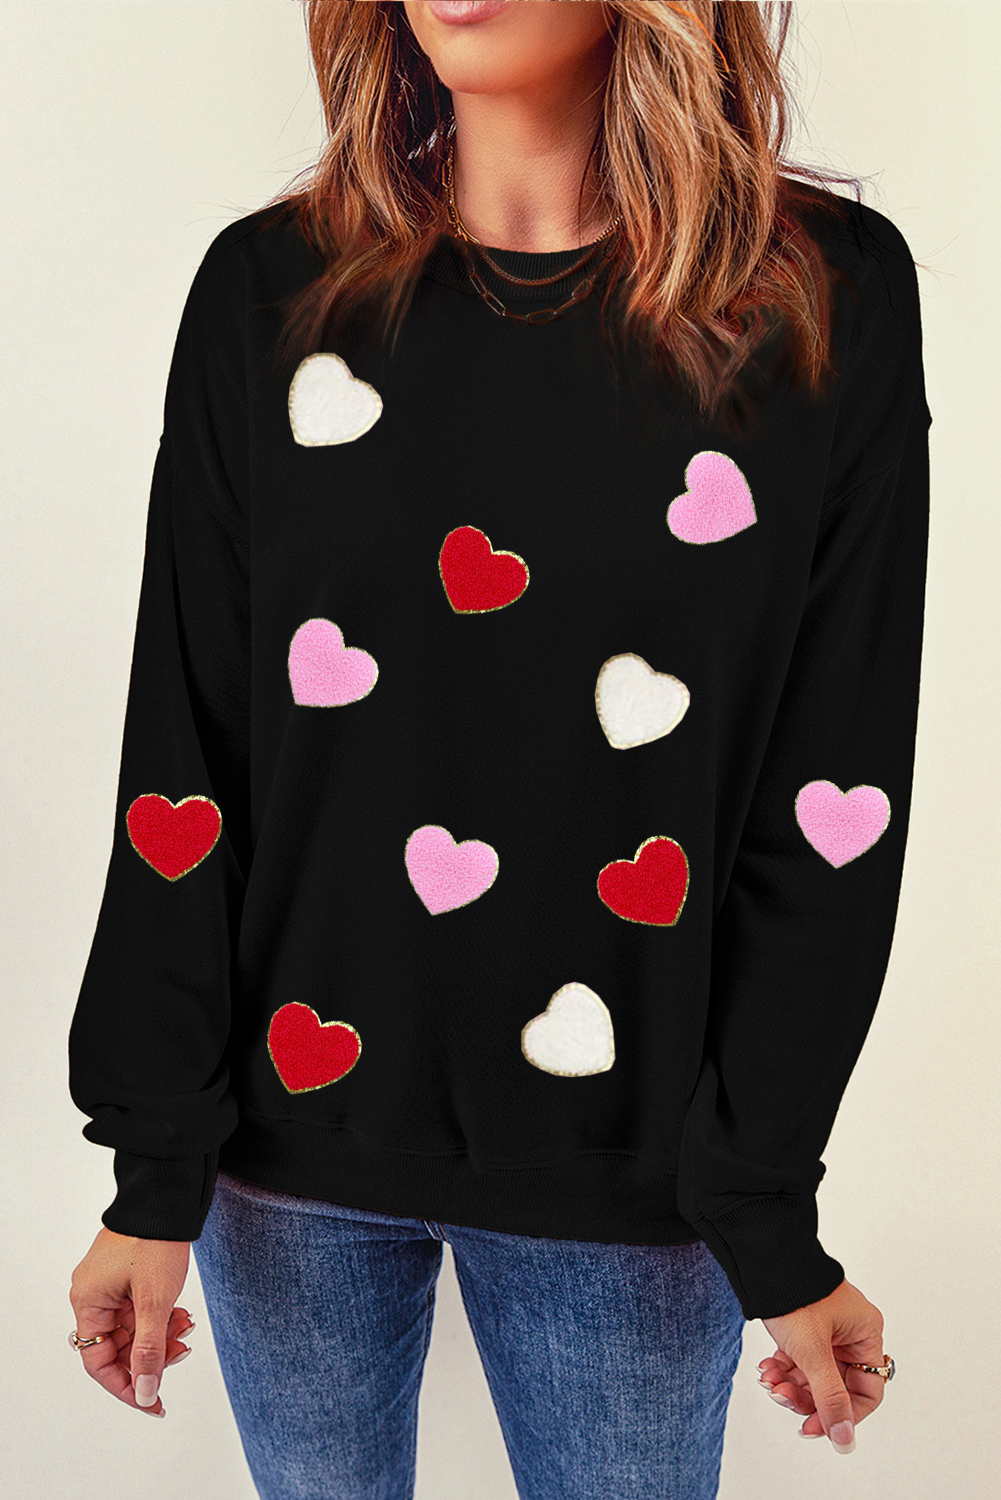 $10.08 Black Heart Shaped Chenille Embroidered Crew Neck Sweatshirt ...